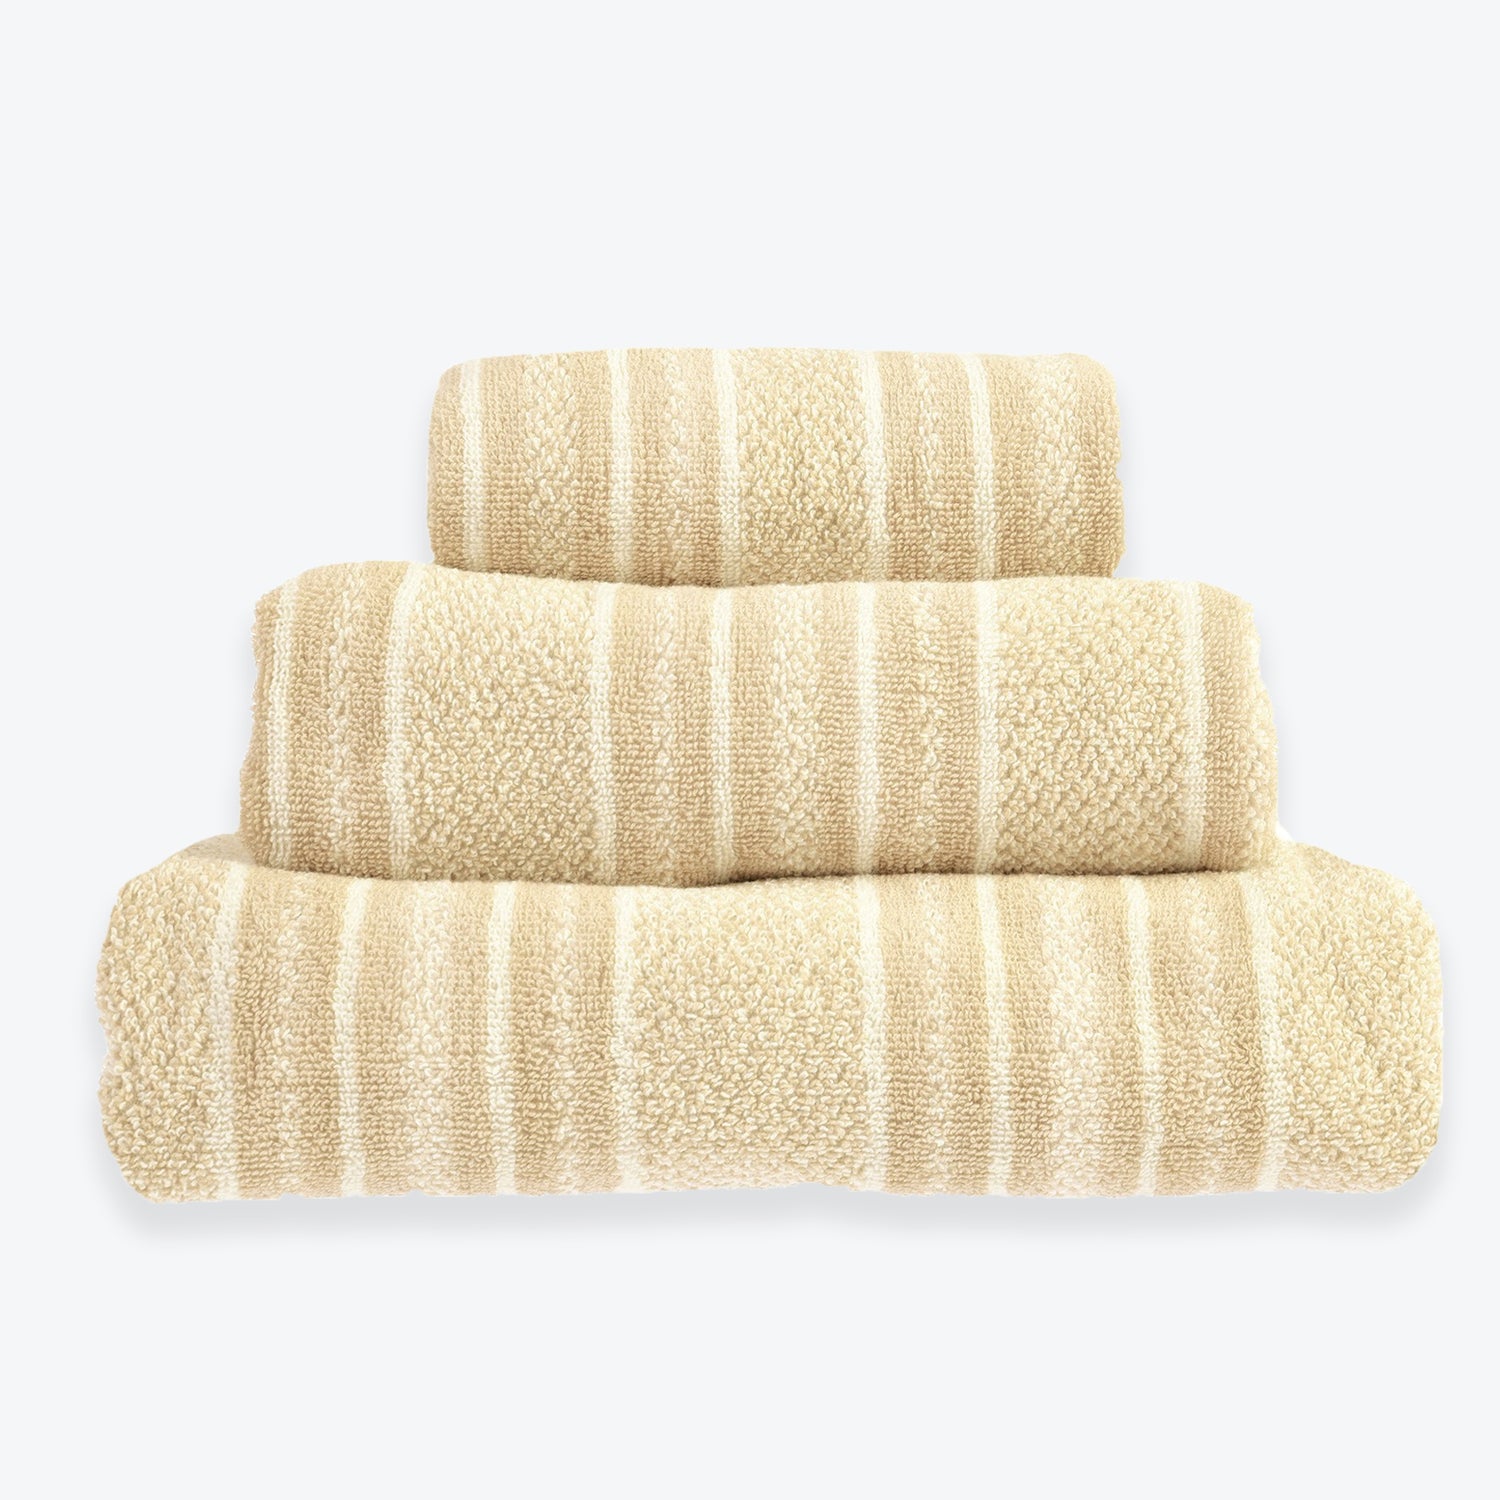 Patterned Bathroom Towels - Beige Striped Towels